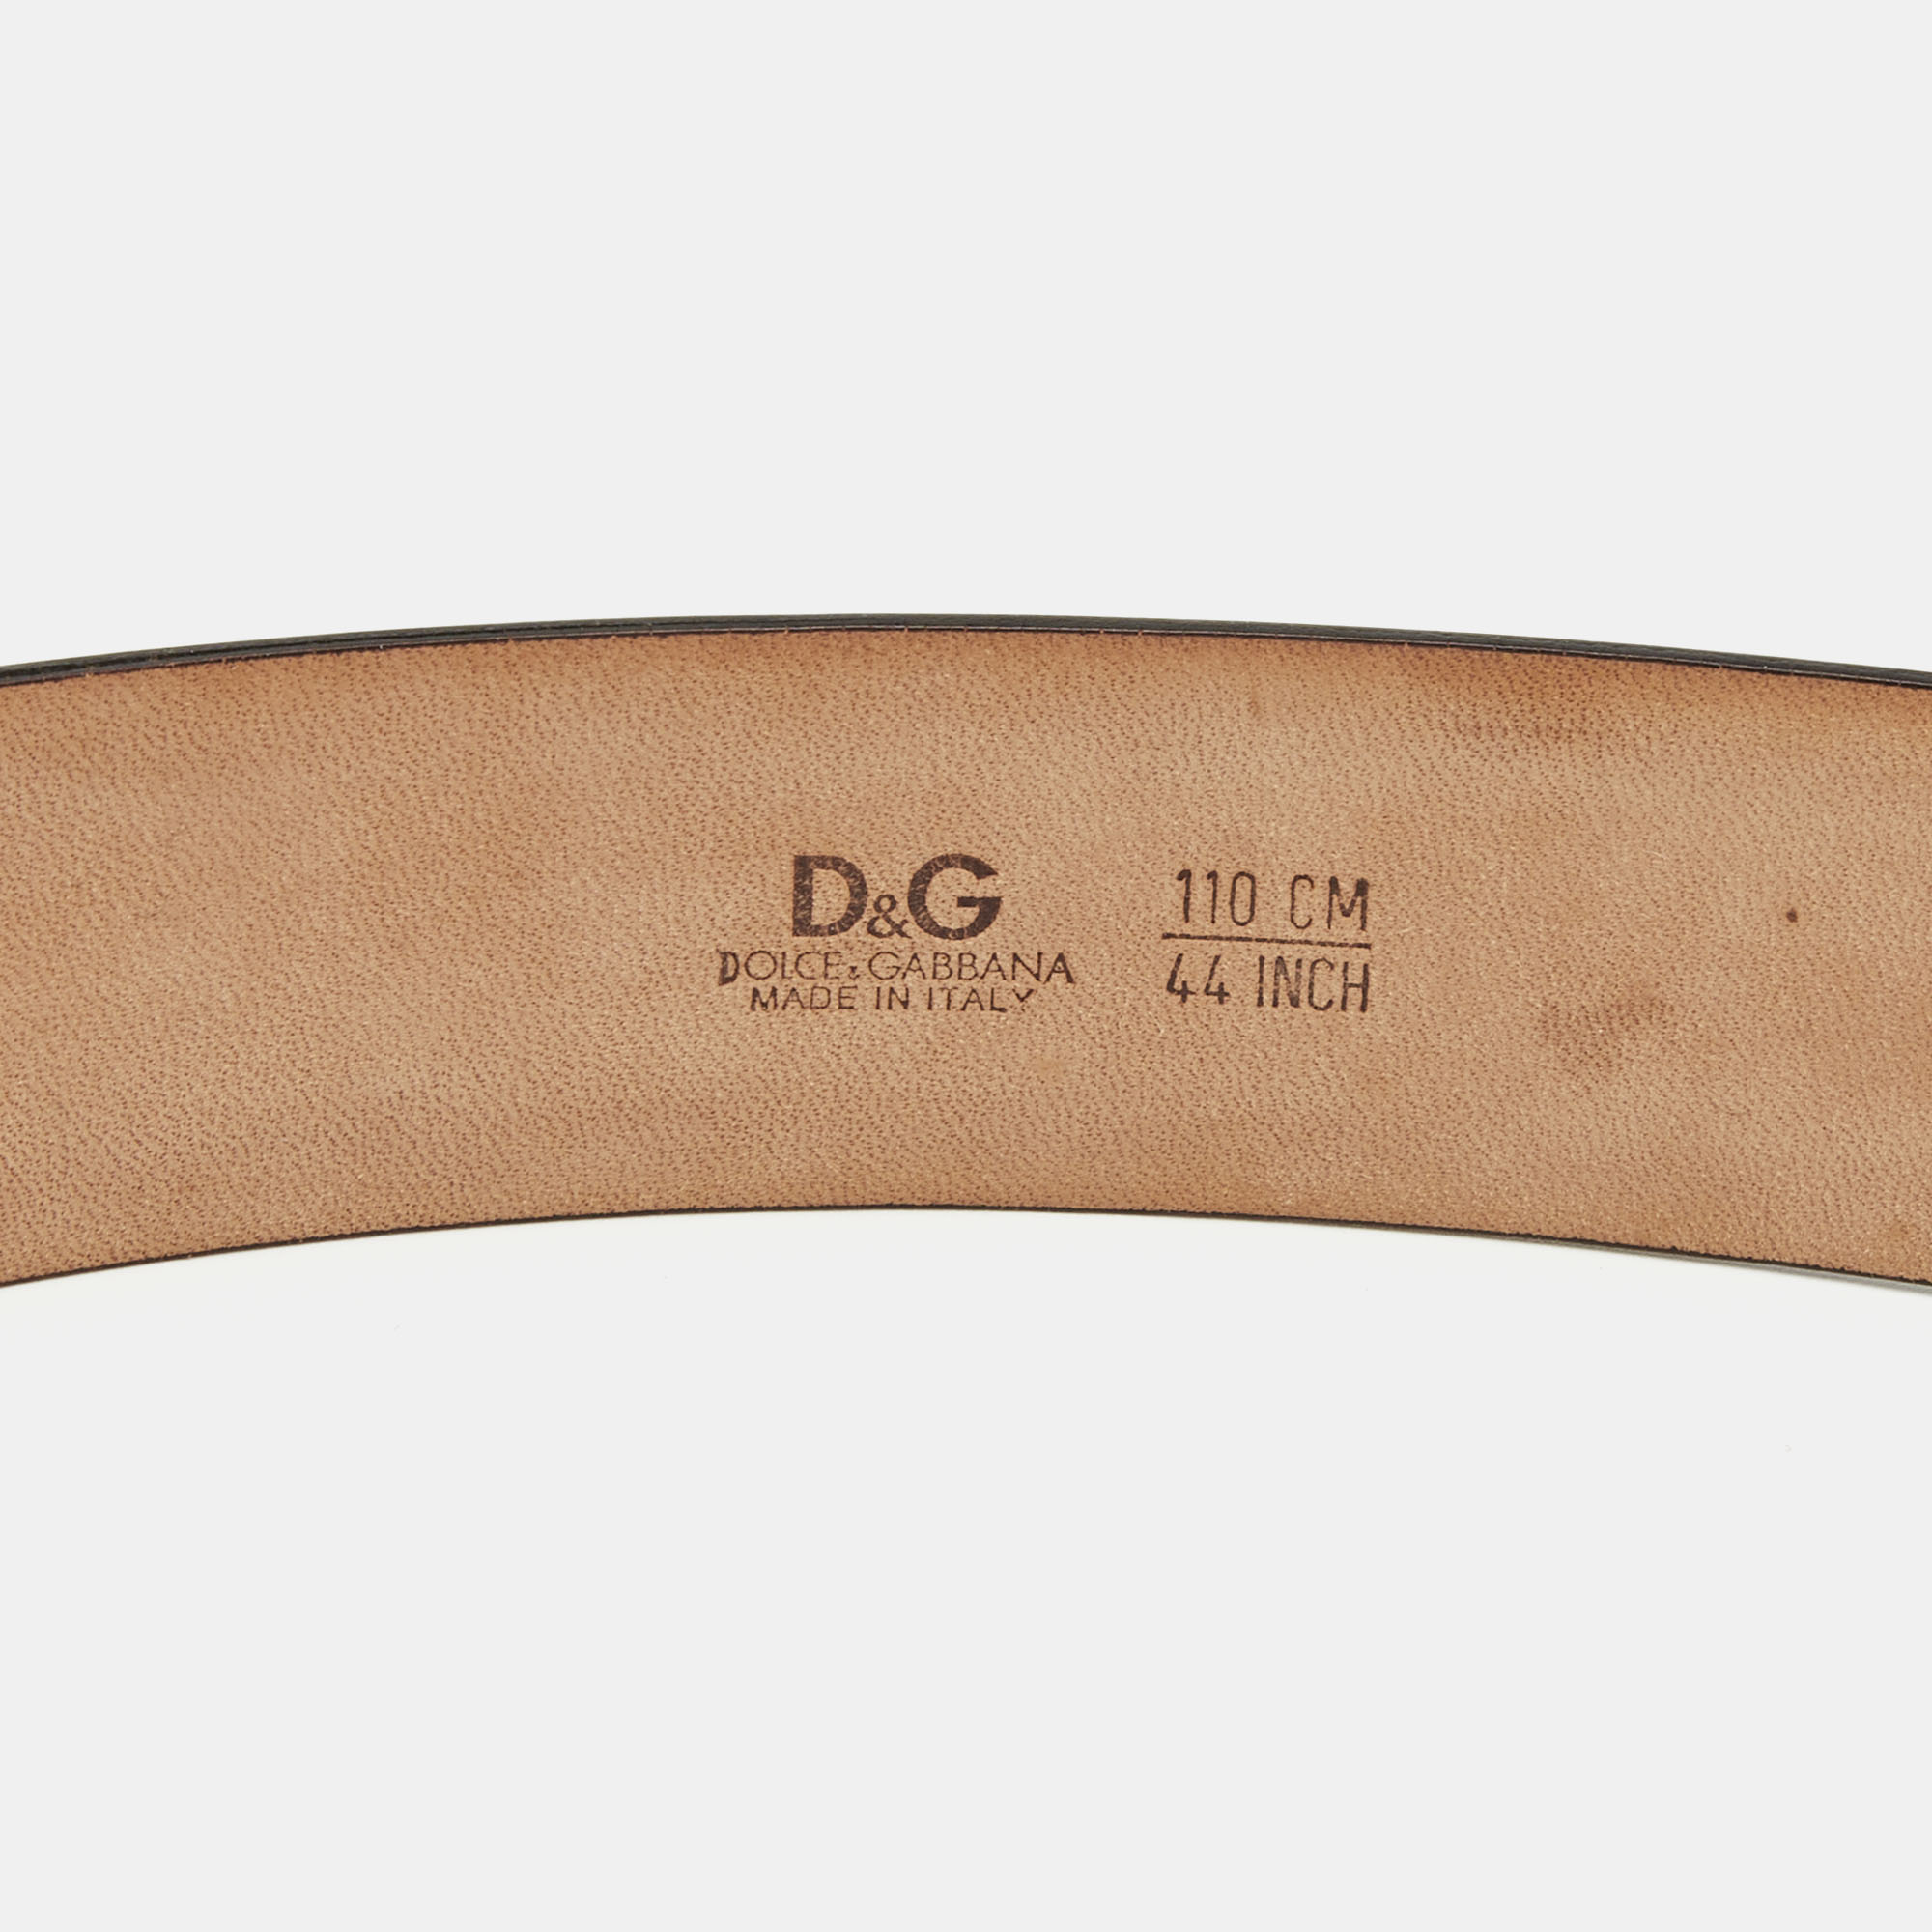 D&G Black Leather Buckle Belt 110CM